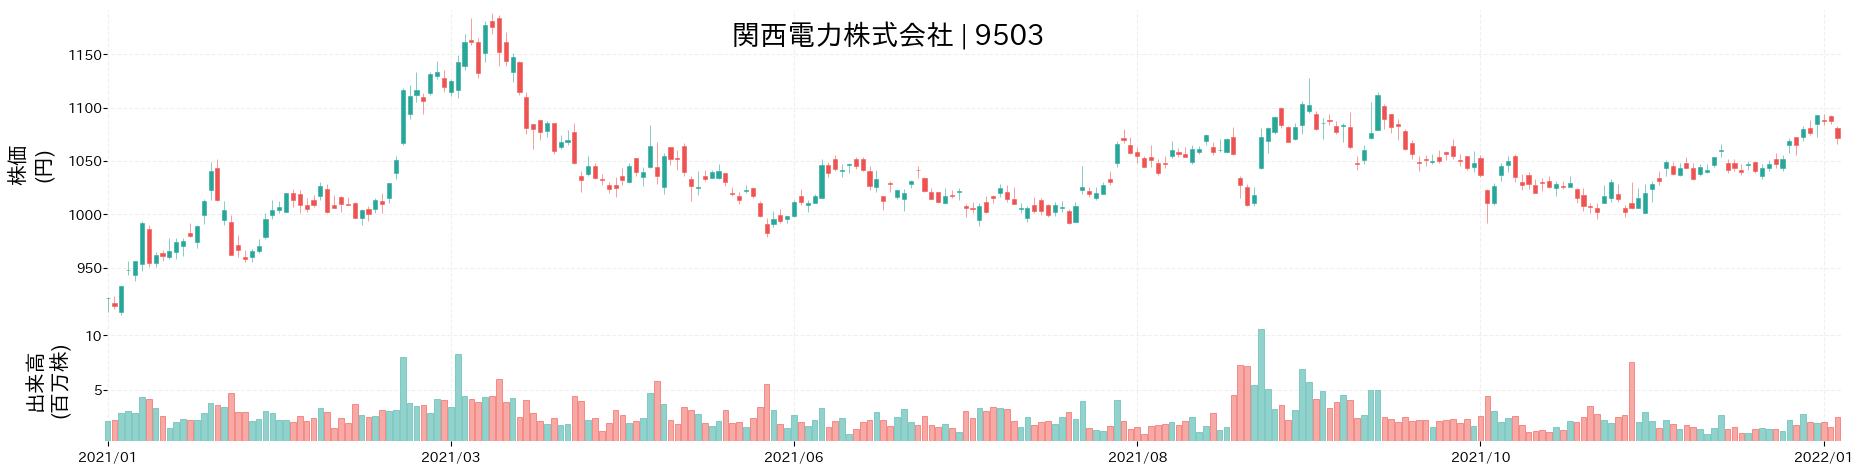 関西電力の株価推移(2021)